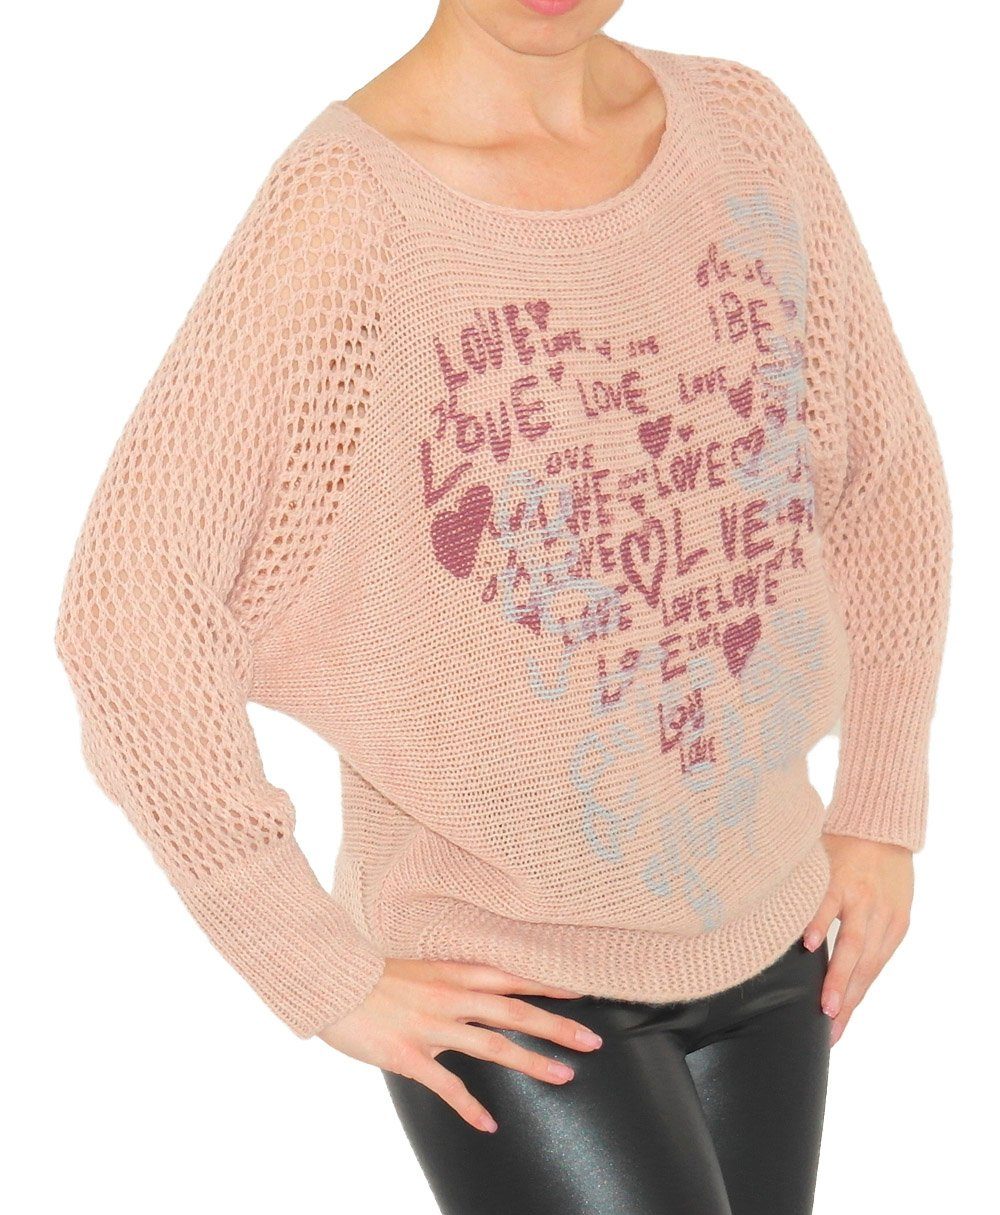 Strick Longpullover Top-Netz YESET Pulli Love-Blumen Wolle rosa Pullover leicht